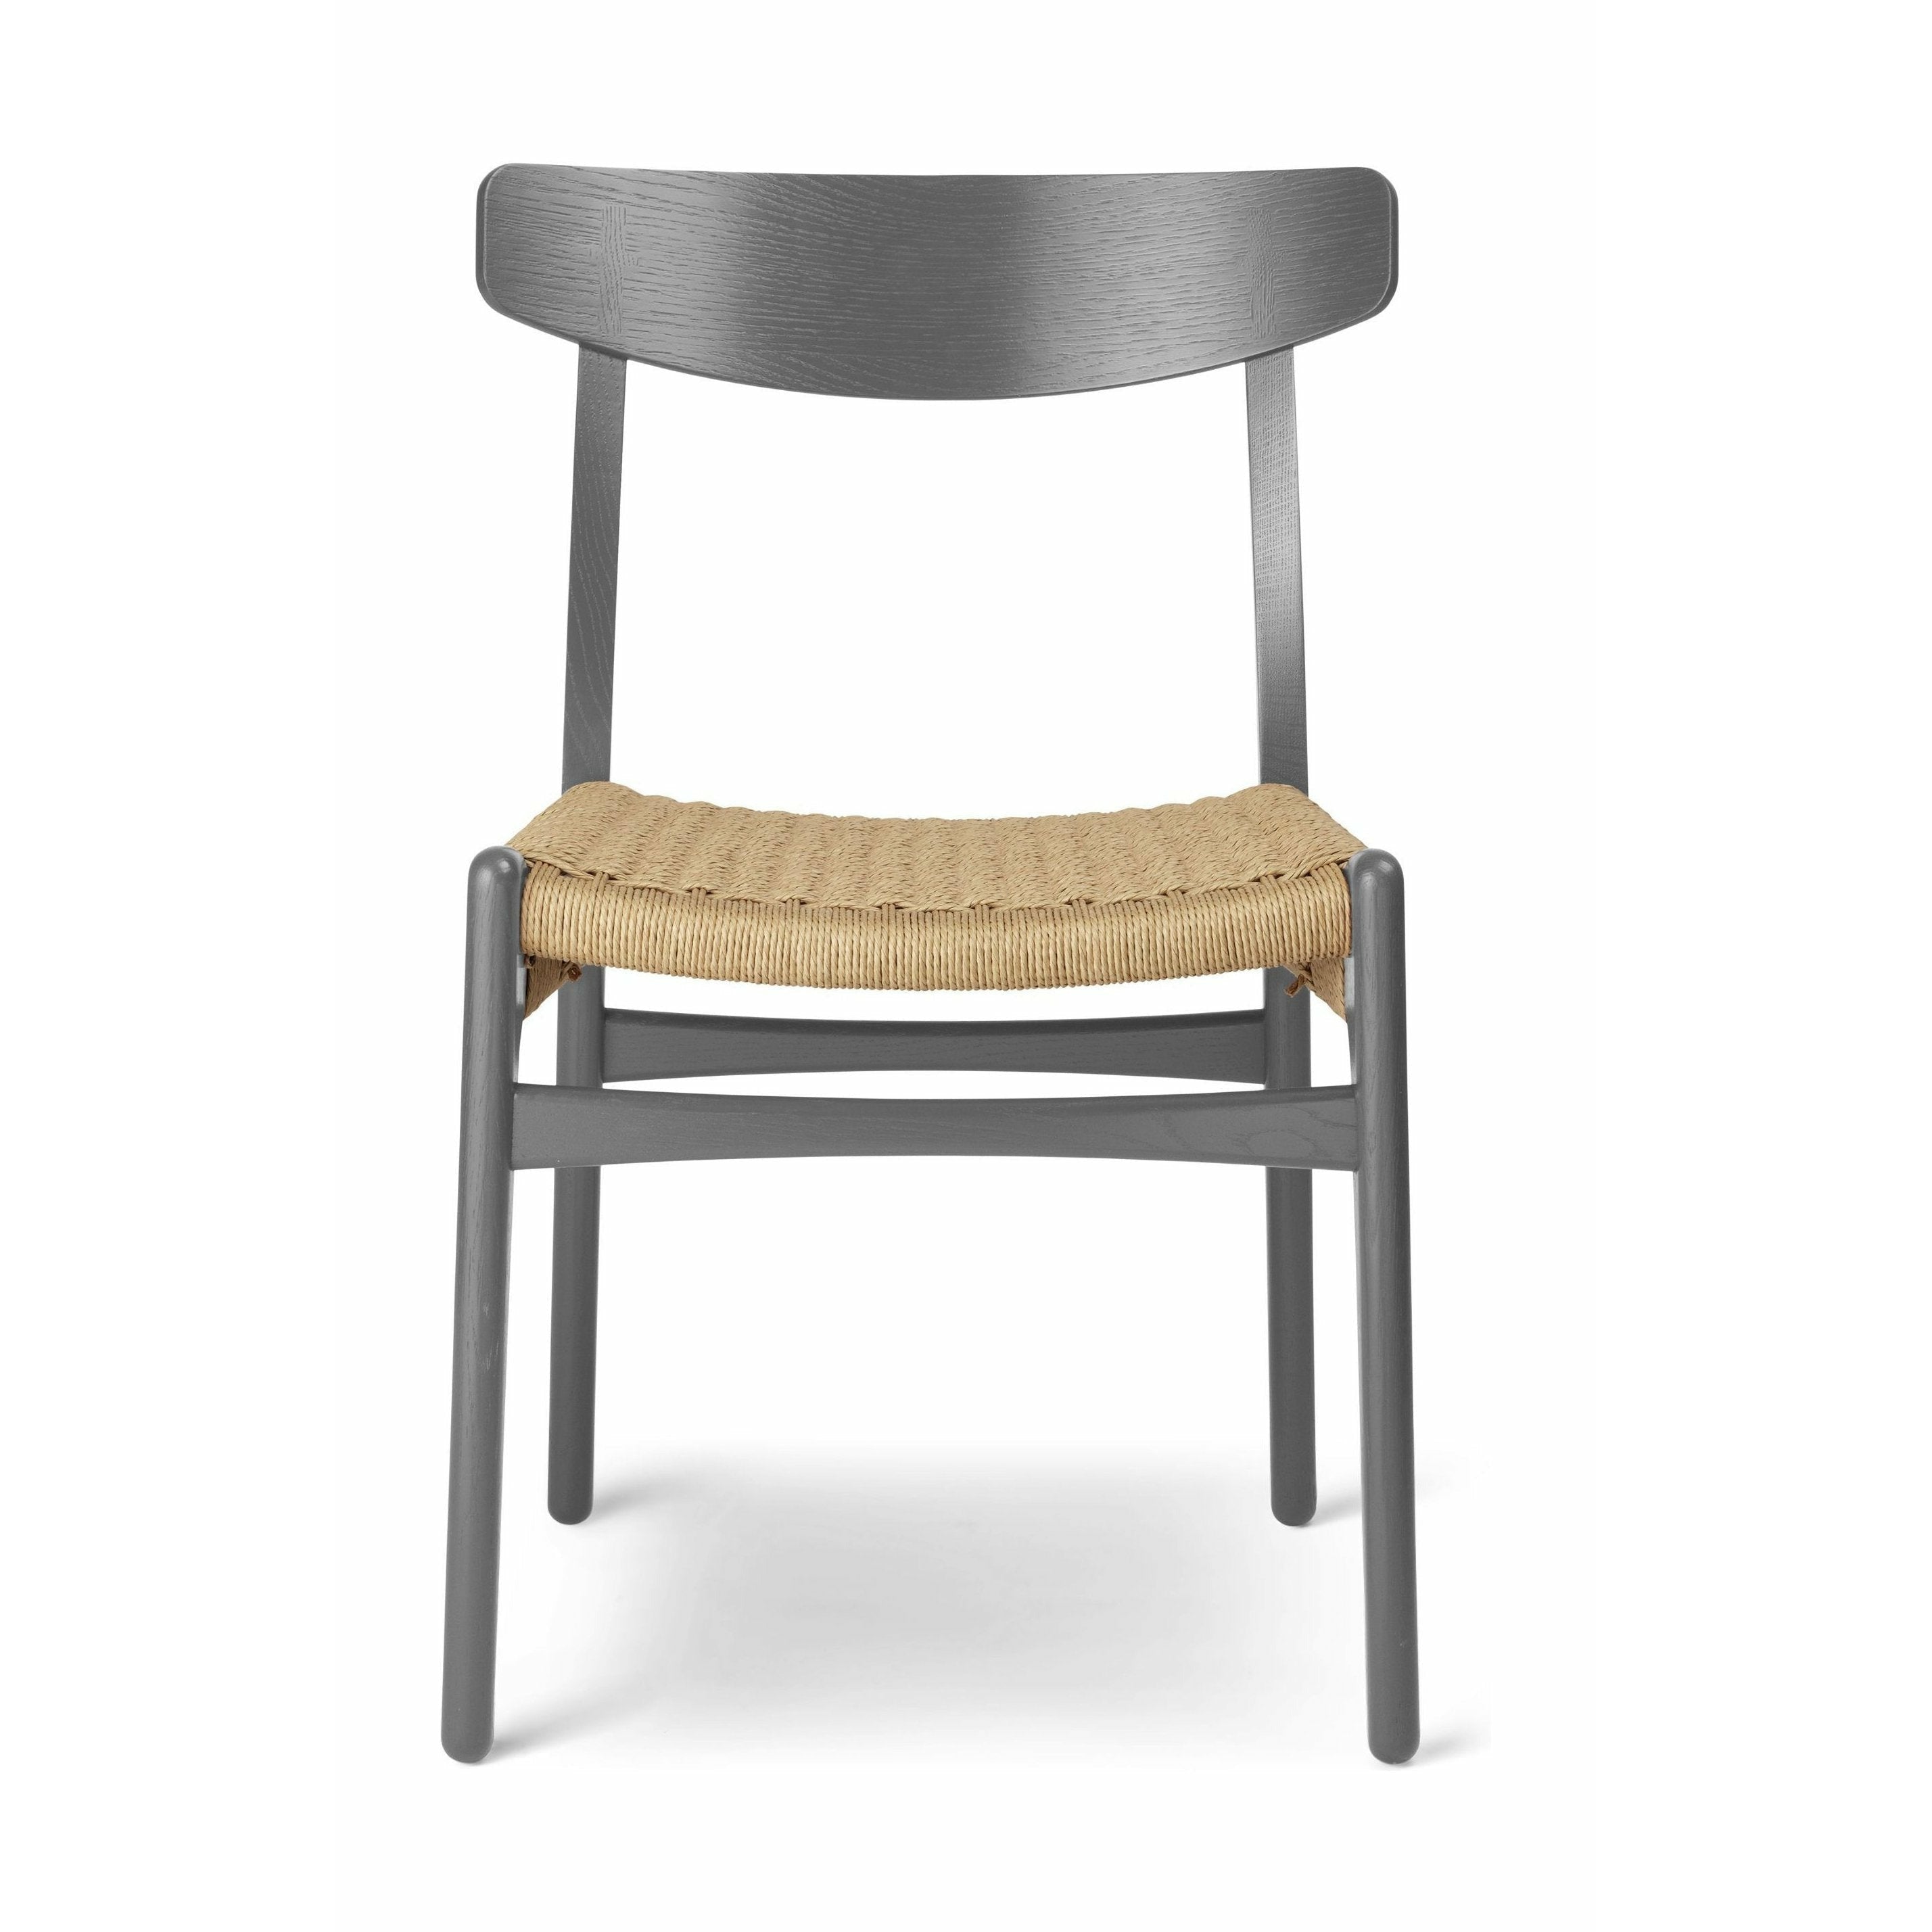 Carl Hansen CH23 -stol ek, skifferbrun/naturlig sladd